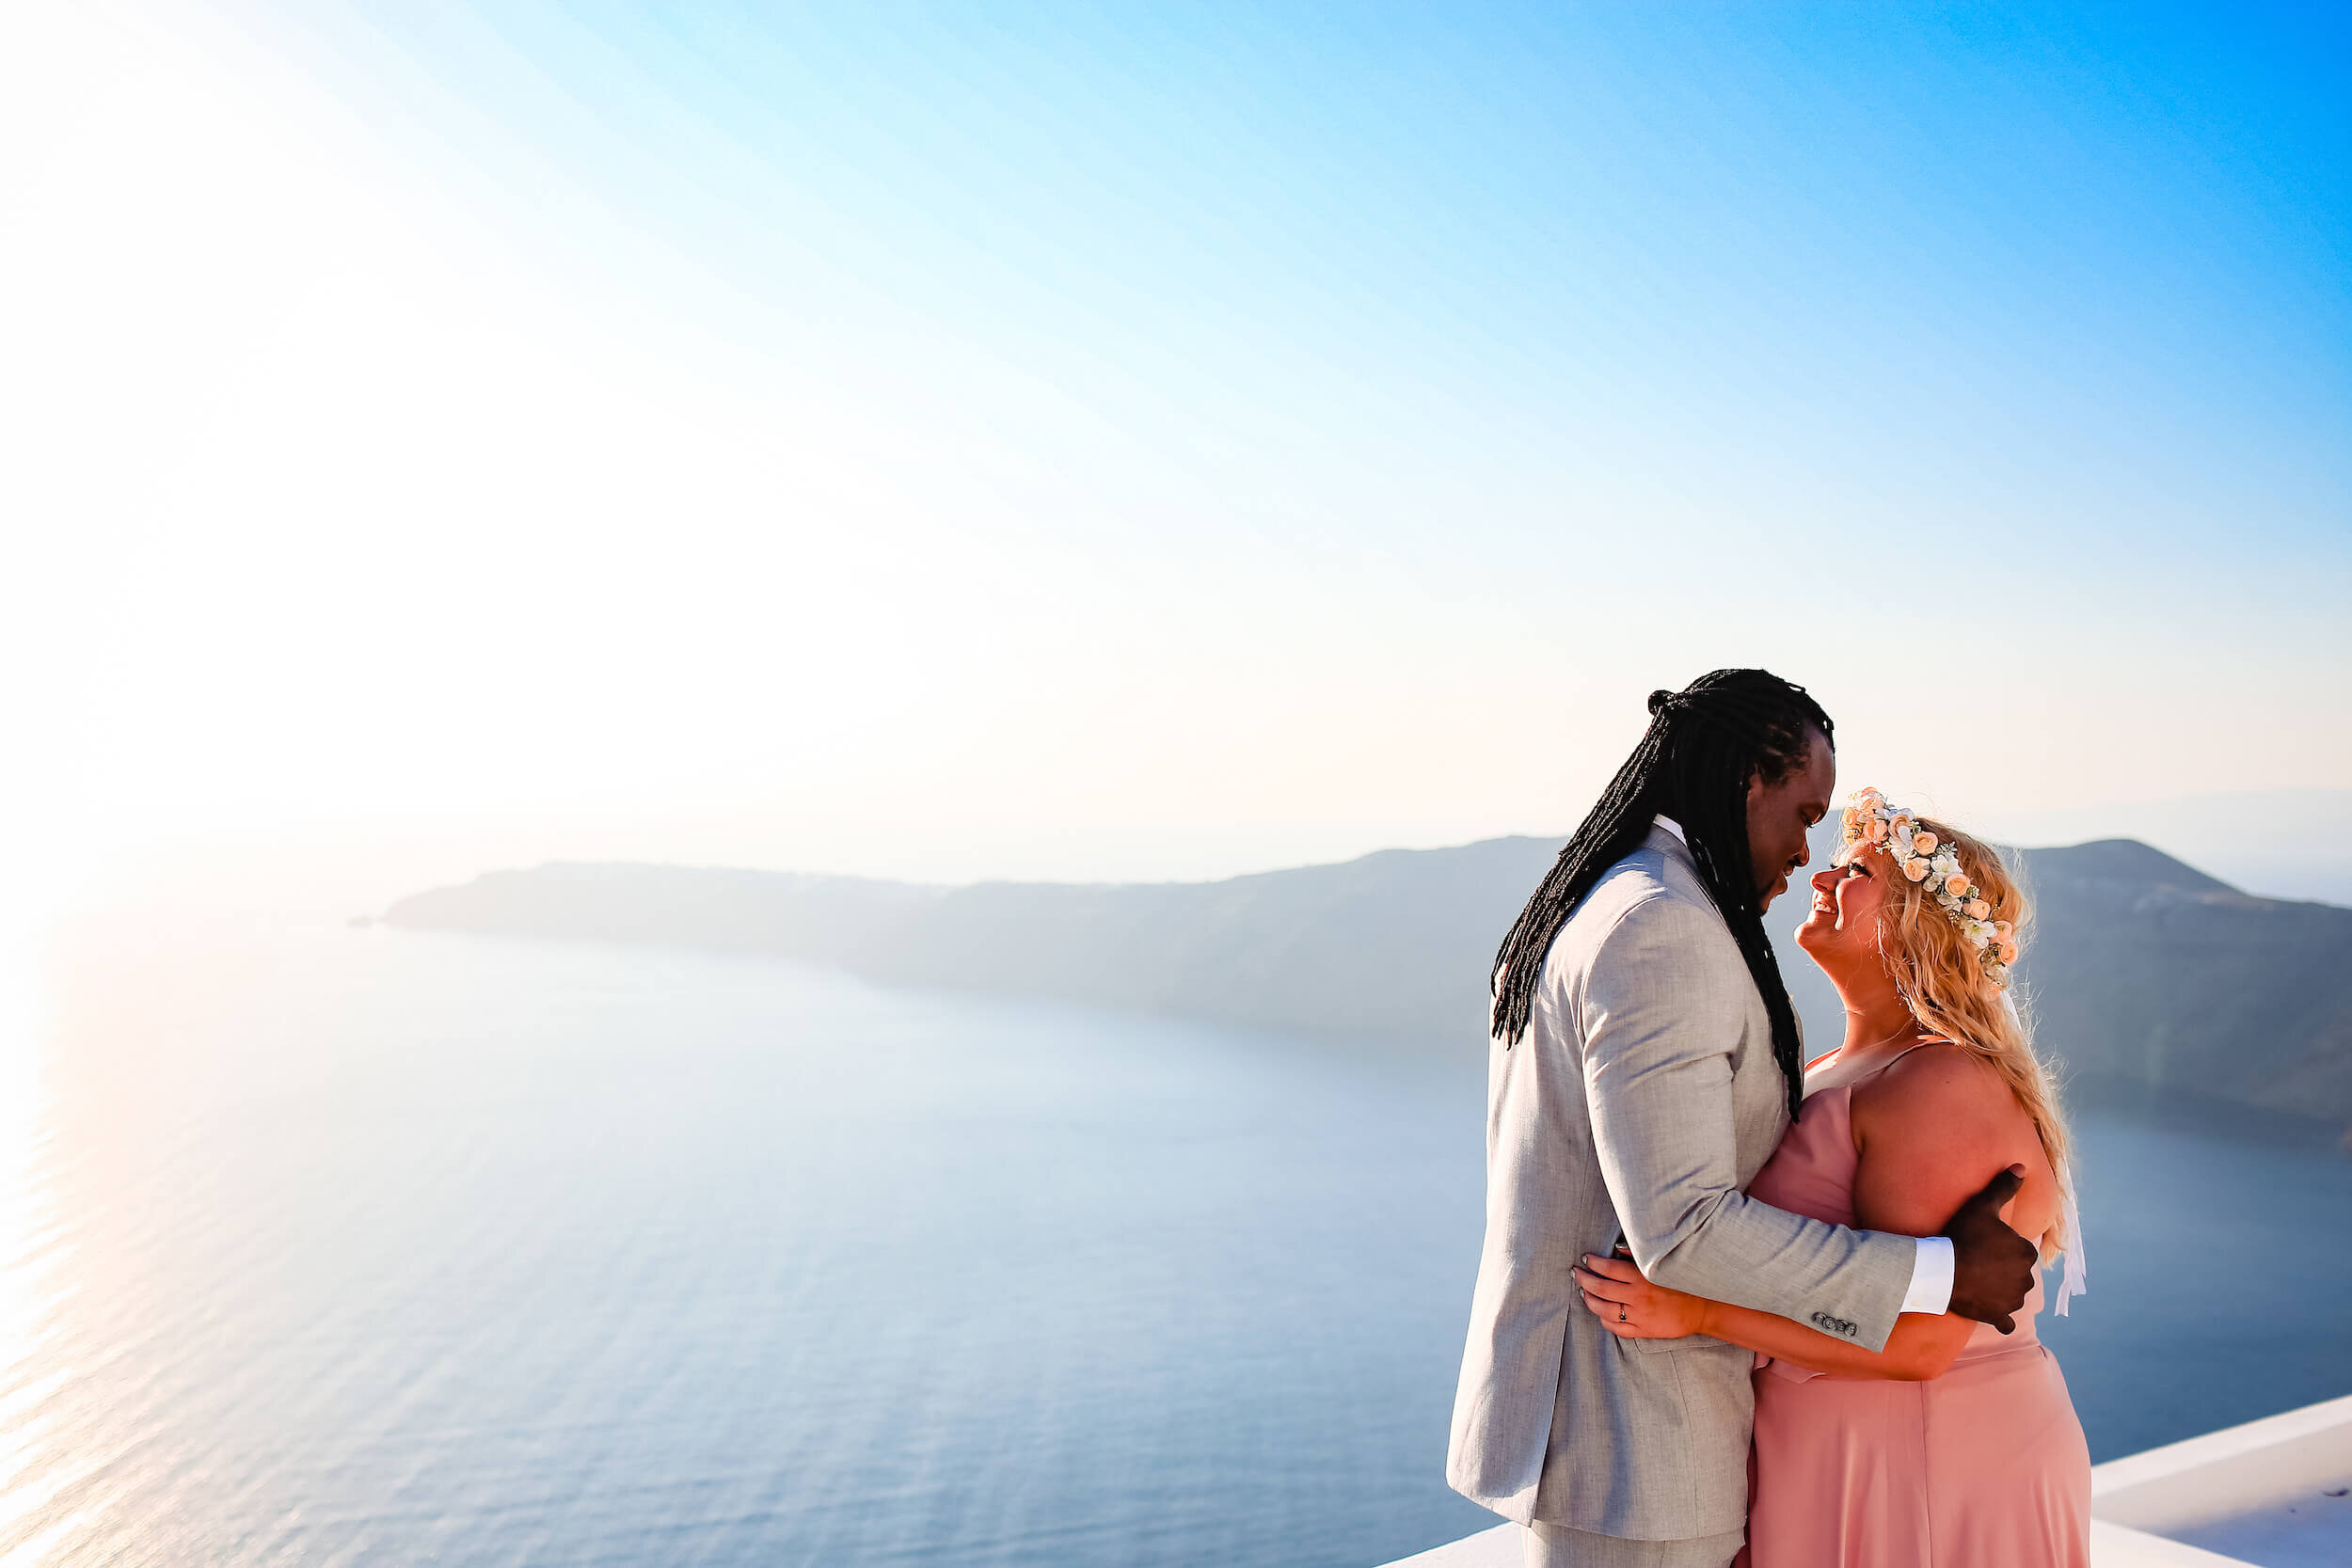 how-to-plan-a-destination-wedding-legally-in-santorini-greece-desti-bride-lisa-desti-guide-to-destination-weddings-podcast-1-2019.jpg